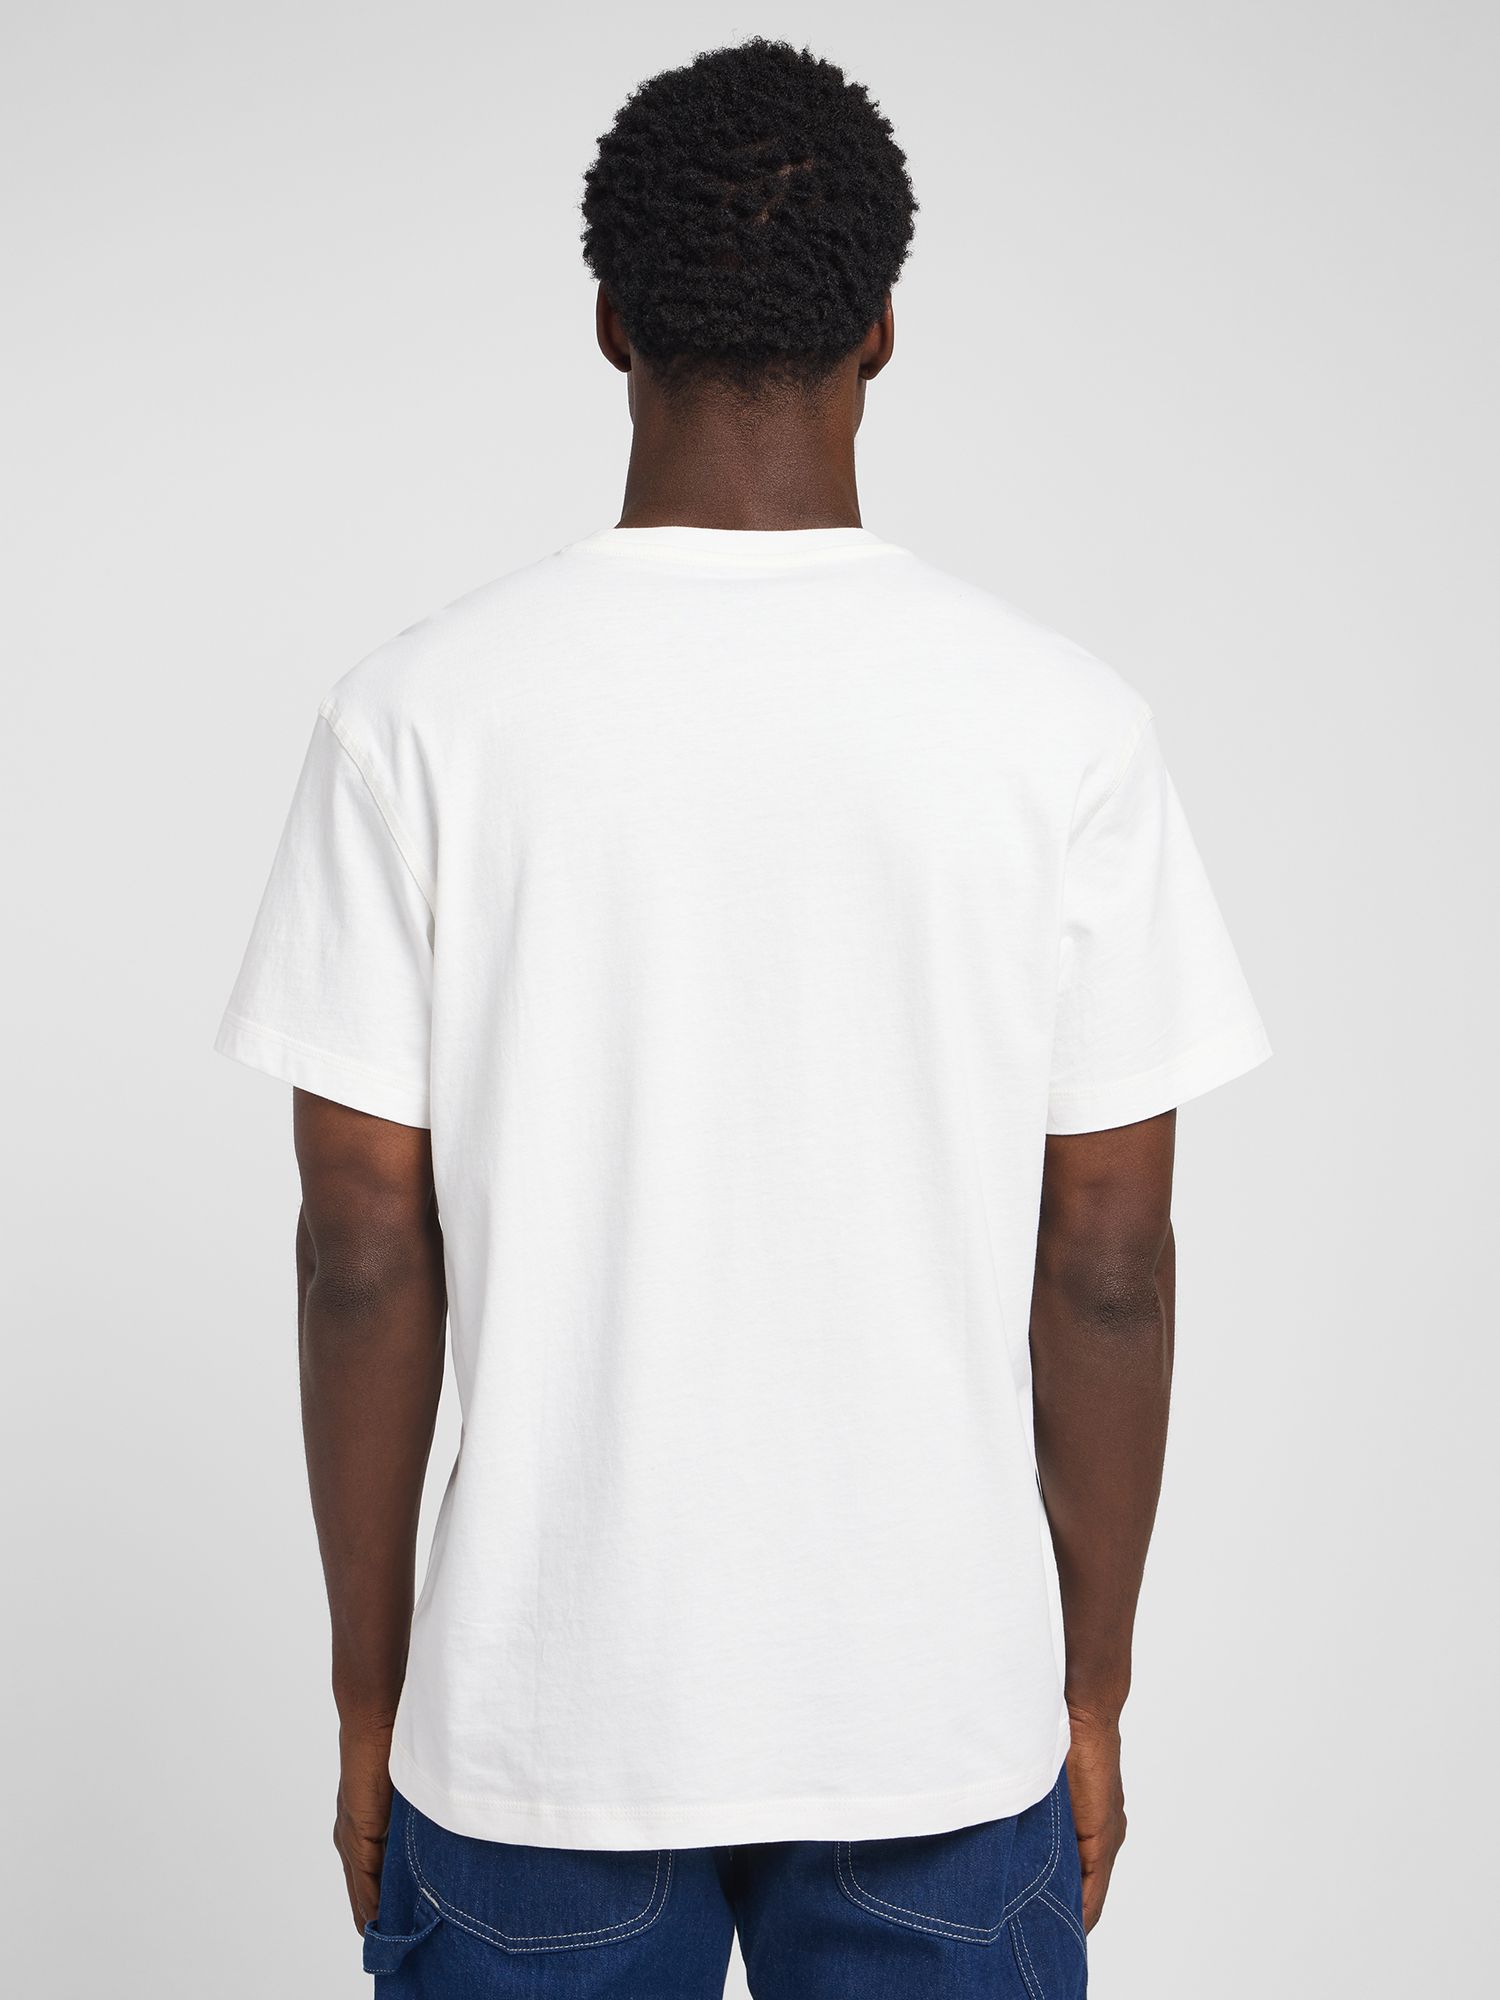 Lee Cotton T-Shirt, Bright White, XL